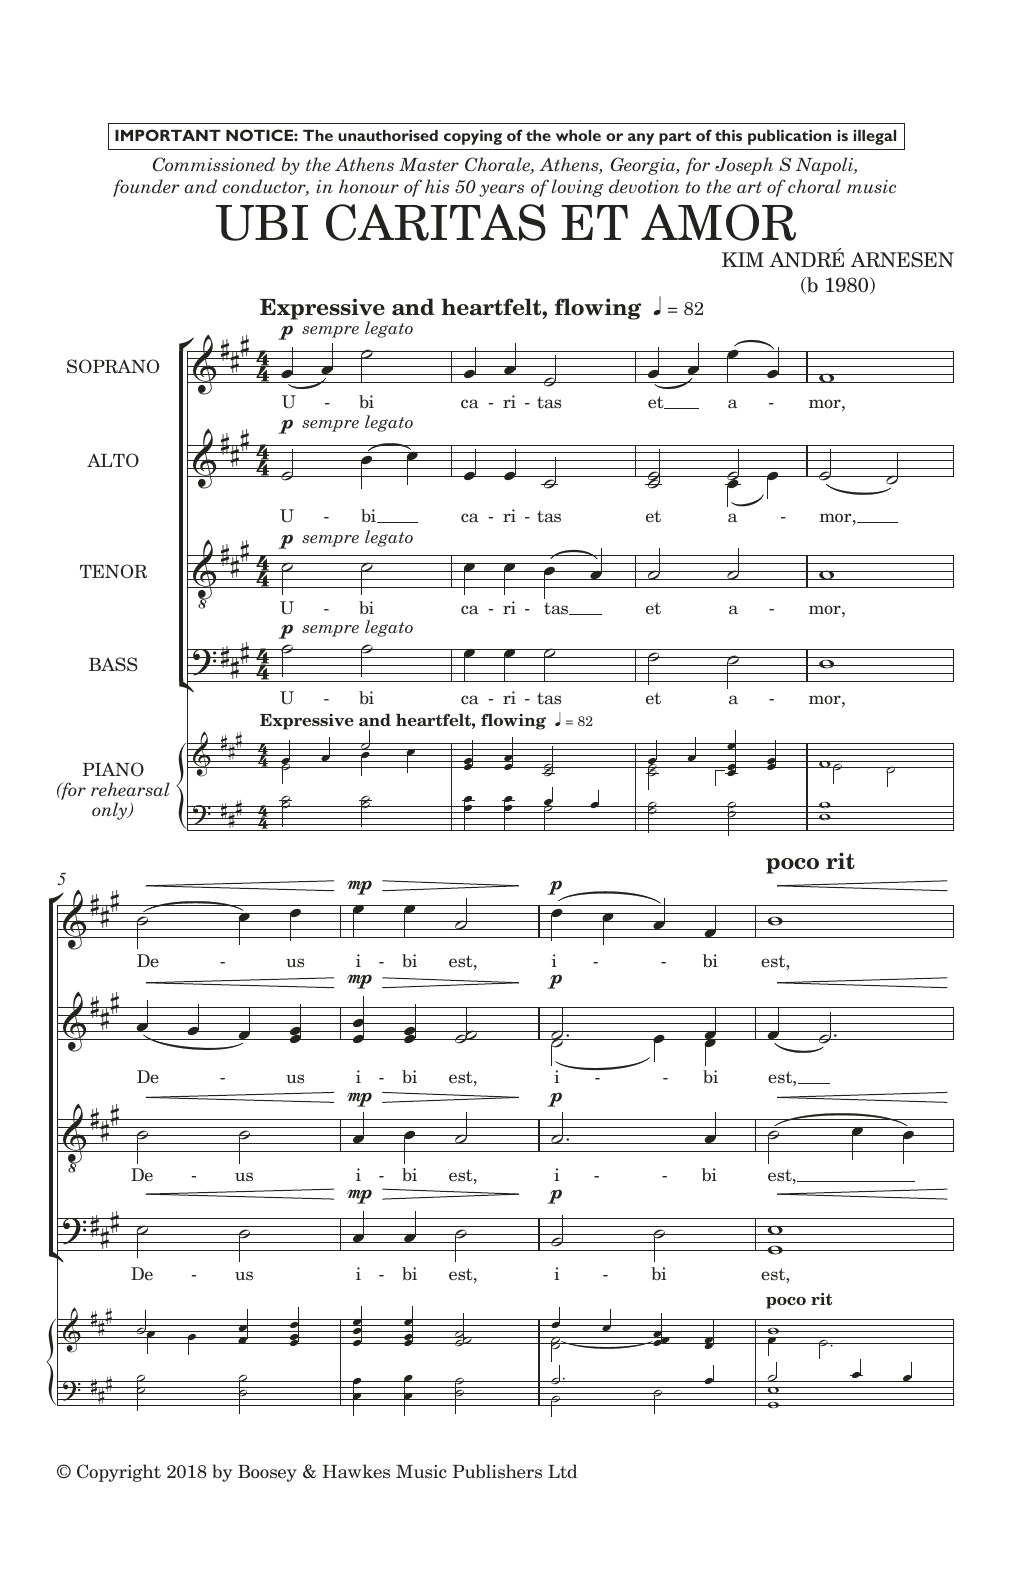 Kim Andre Arnesen Ubi Caritas Et Amor Sheet Music Notes & Chords for SSA Choir - Download or Print PDF